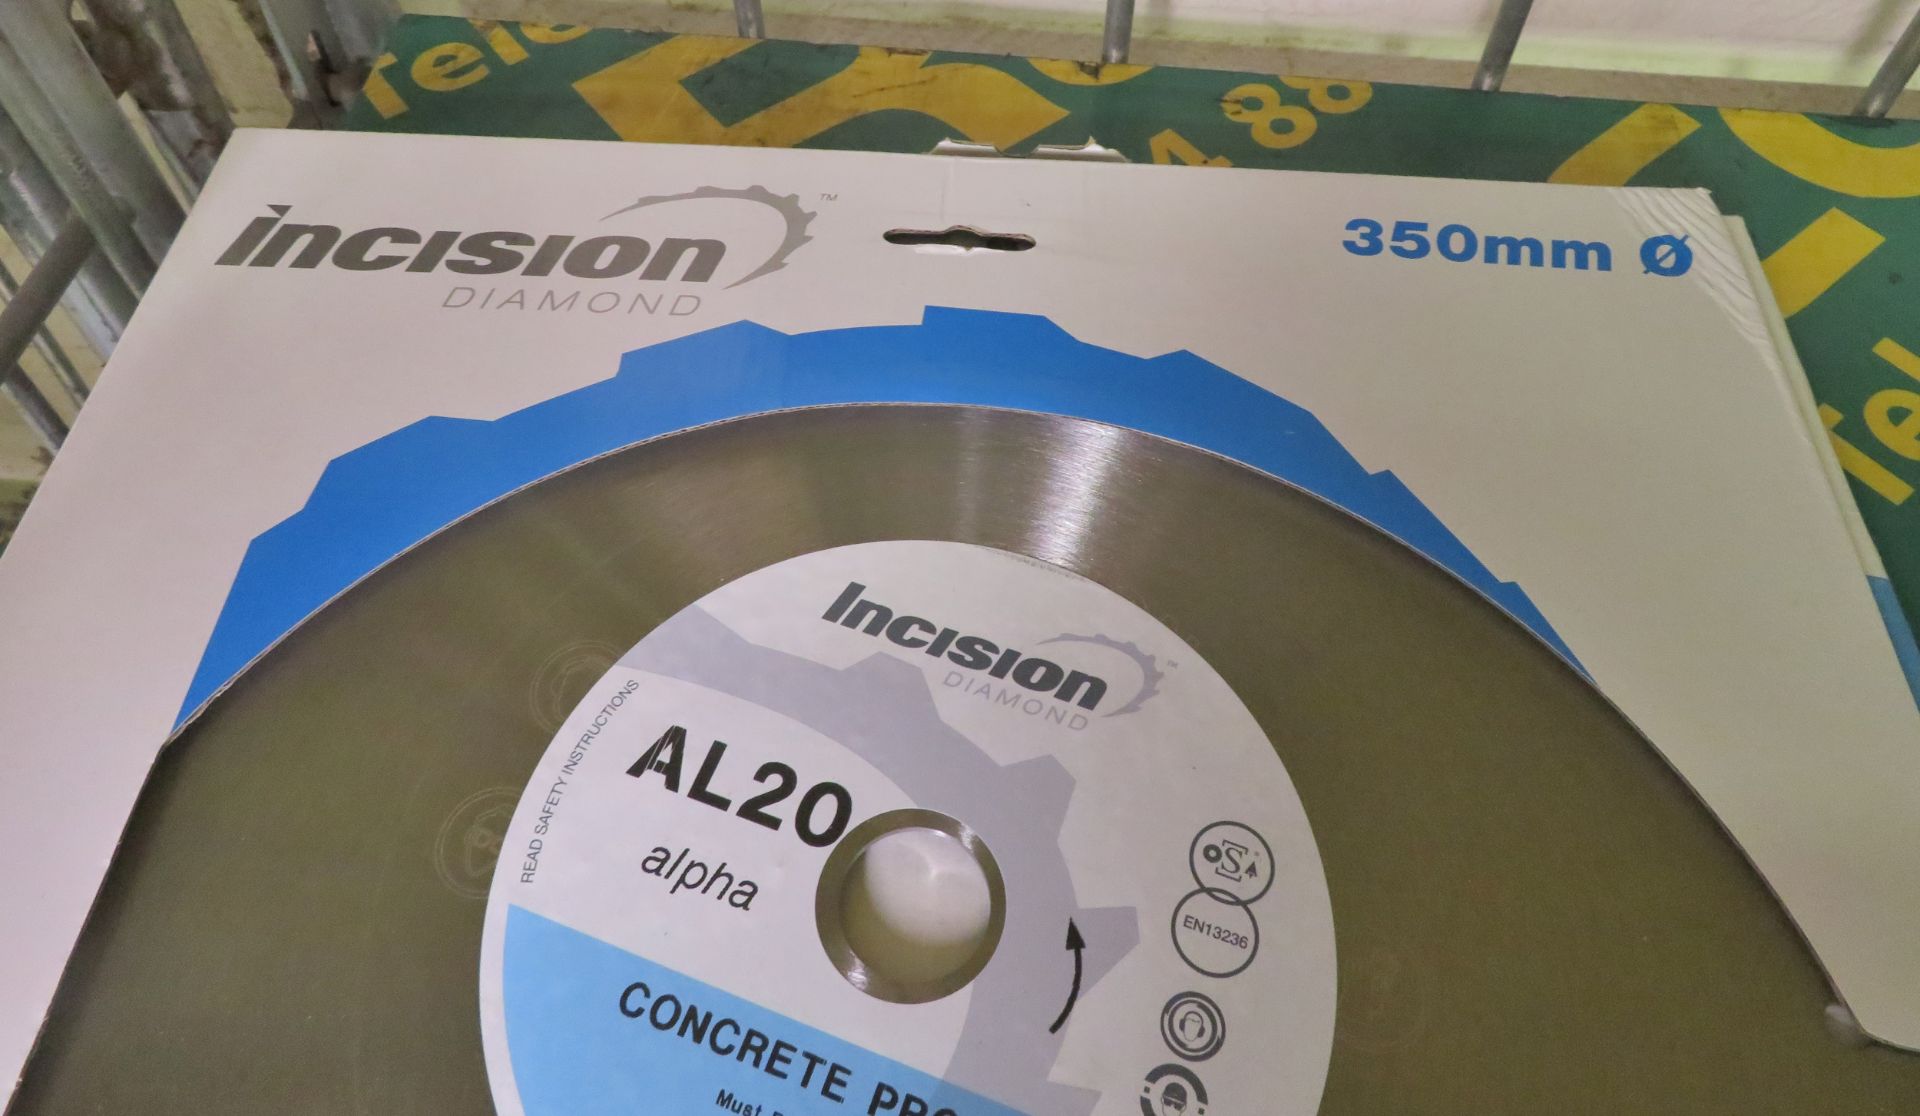 3x Incision AL20 Professional Diamond Blades Cut Concrete 350mm - Image 2 of 3